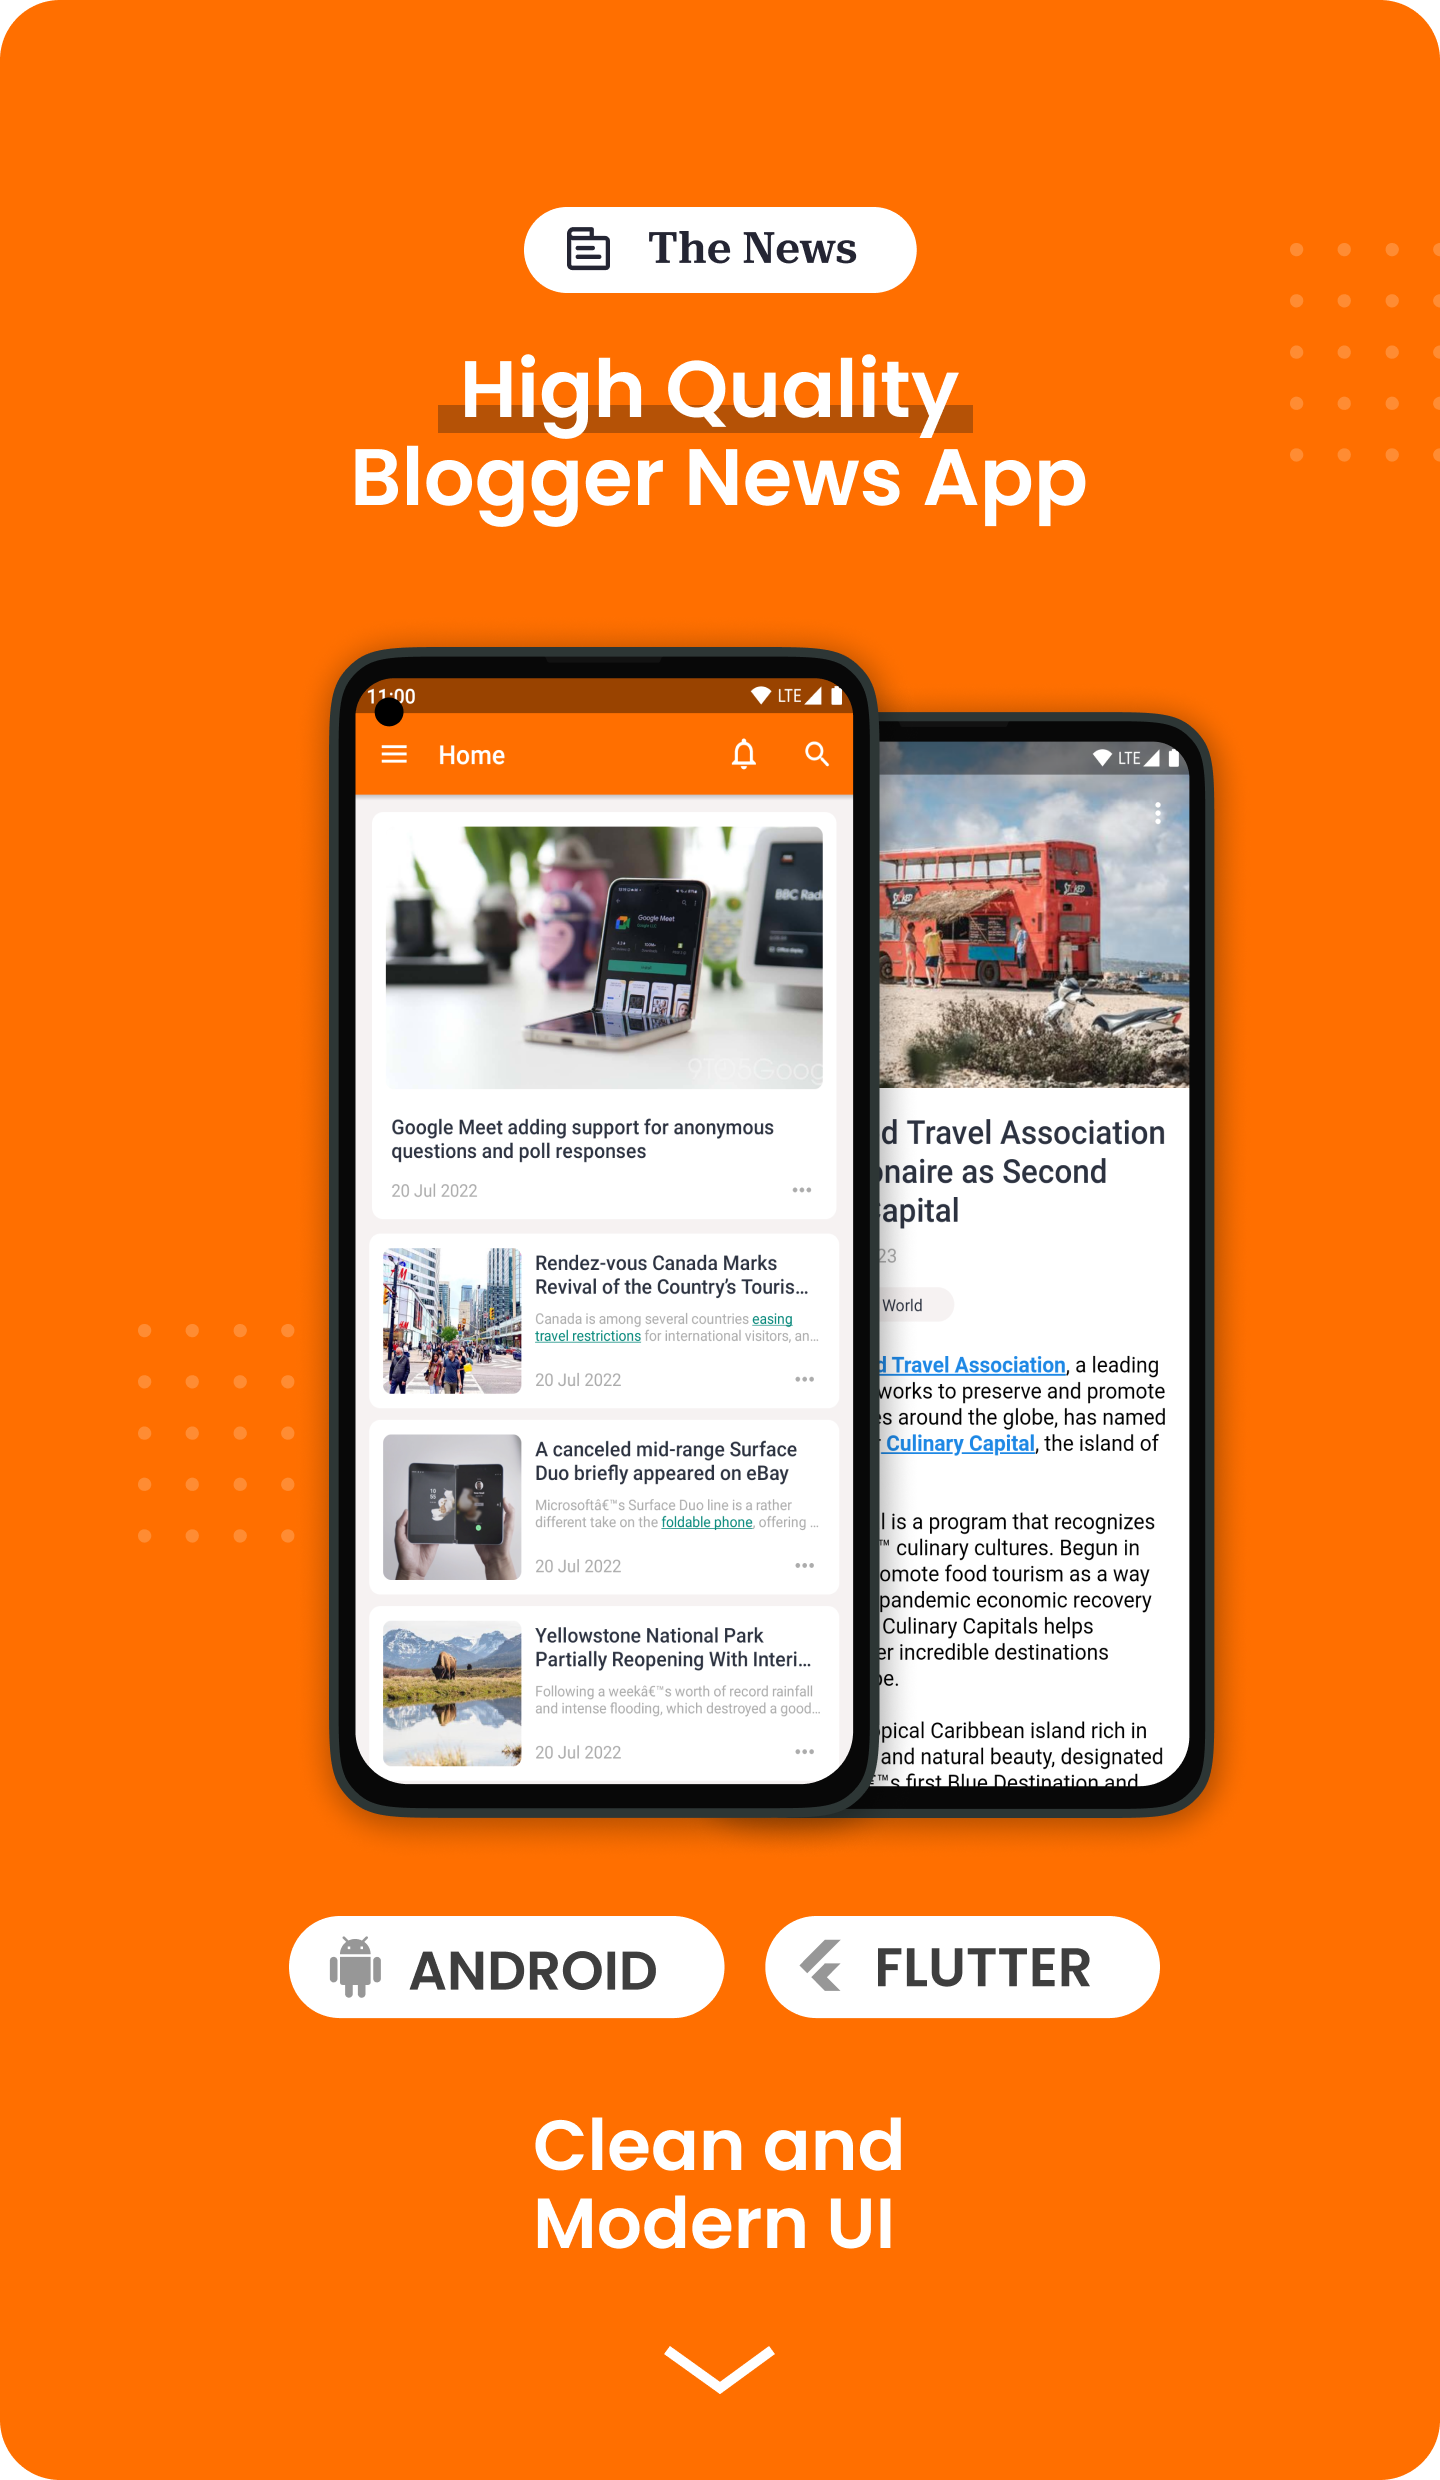 The News - Premium Blogger News App ( Android & Flutter ) 2.0 - 1